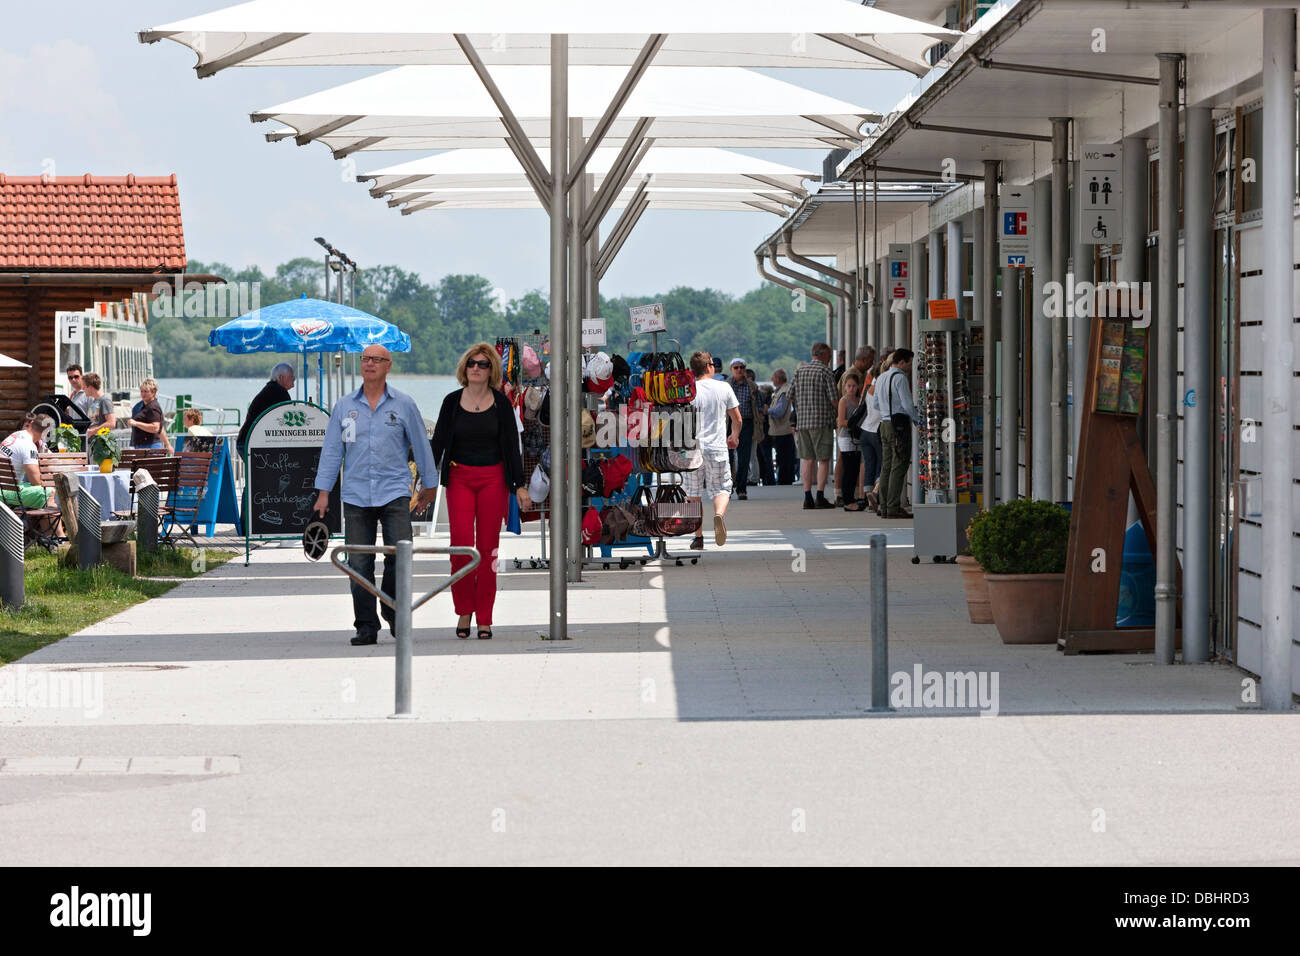 Shopping Promenade am Prien Stock, Chiemsee Chiemgau, obere Bayern  Deutschland Europa Stockfotografie - Alamy